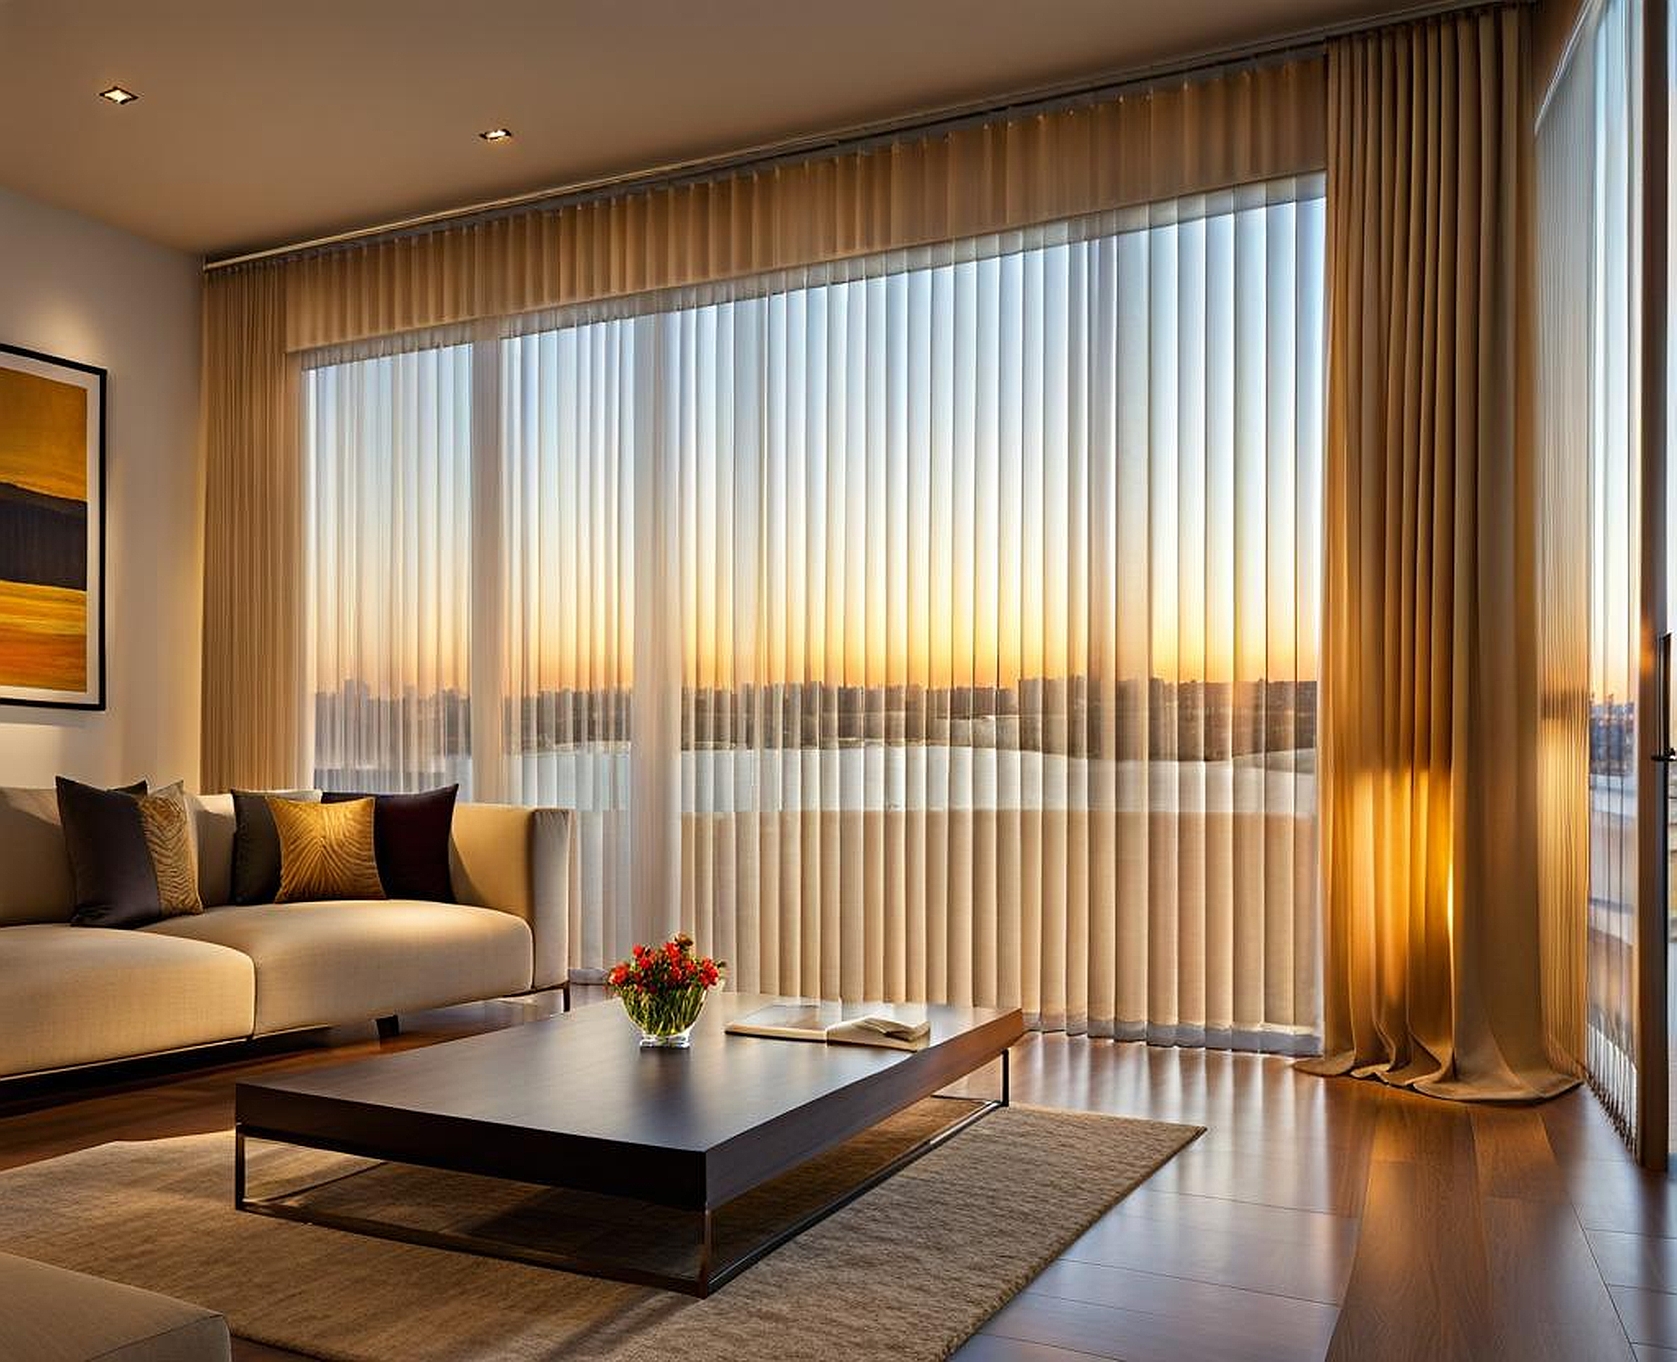 Interior Design Inspiration for Sheer Curtains Over Vertical Blinds